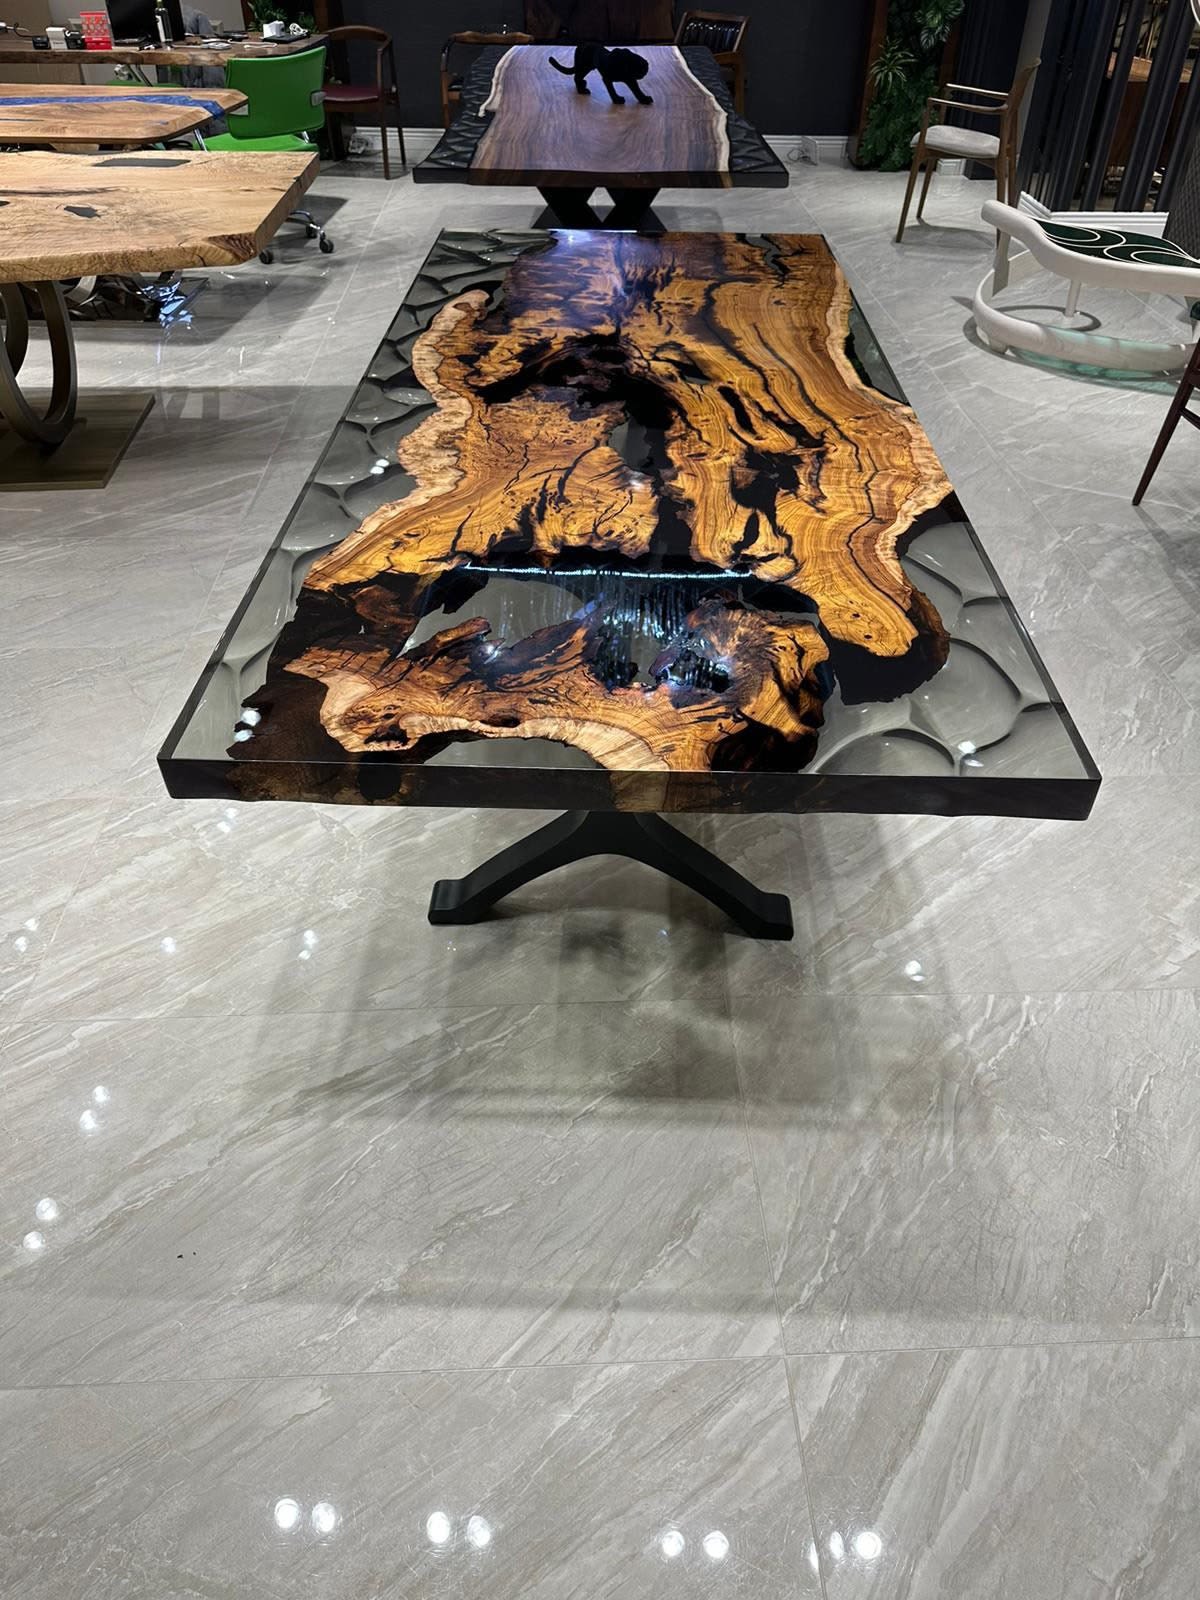 96 x 48 Epoxy Resin Table Stunning River Table Design Unique Home Decor